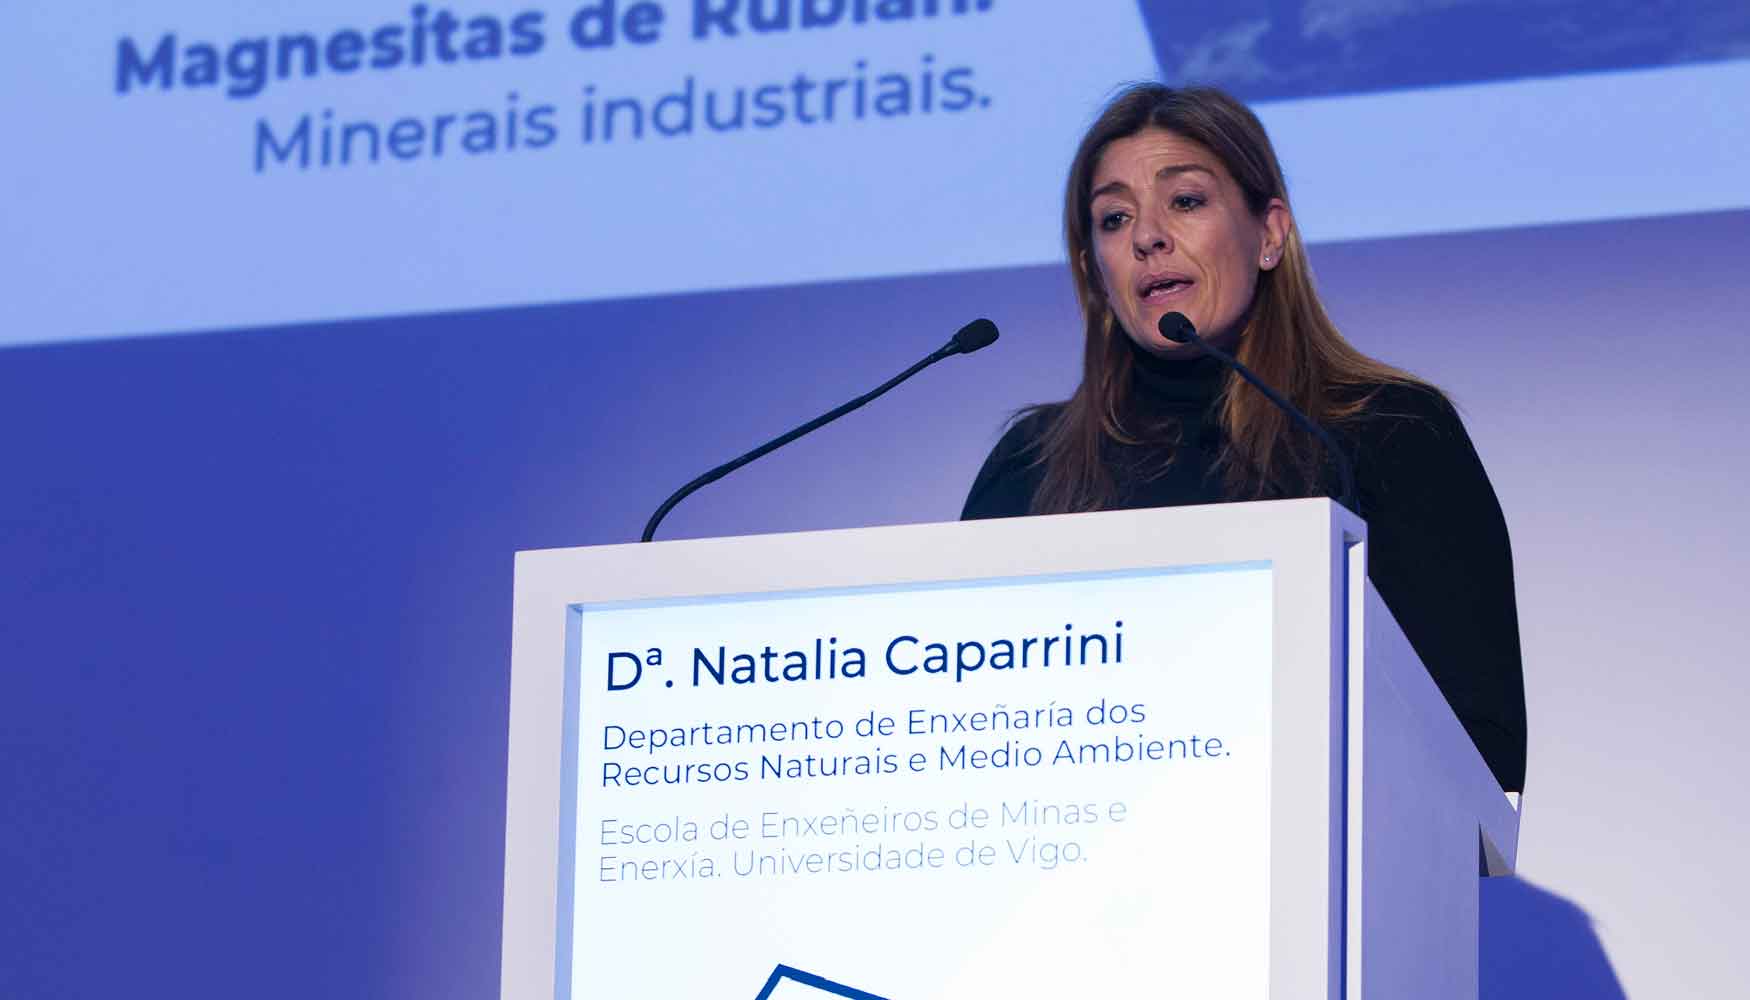 Natalia Caparrini, de la Escuela de Ingenieros de Minas y Energa de la Universidad de Vigo